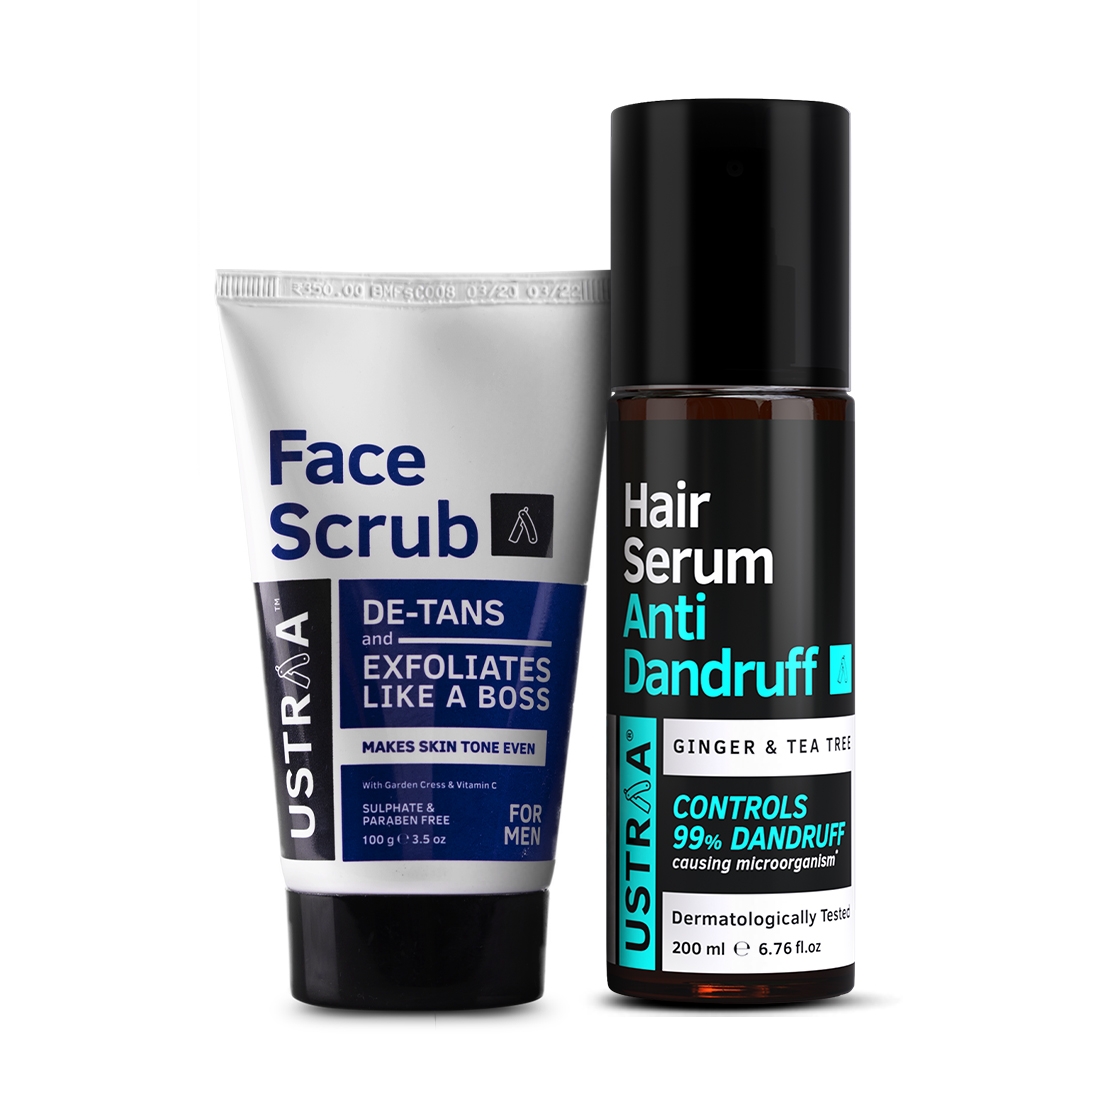 Ustraa Anti Dandruff Serum 200ml & De-Tan Face Scrub 100g